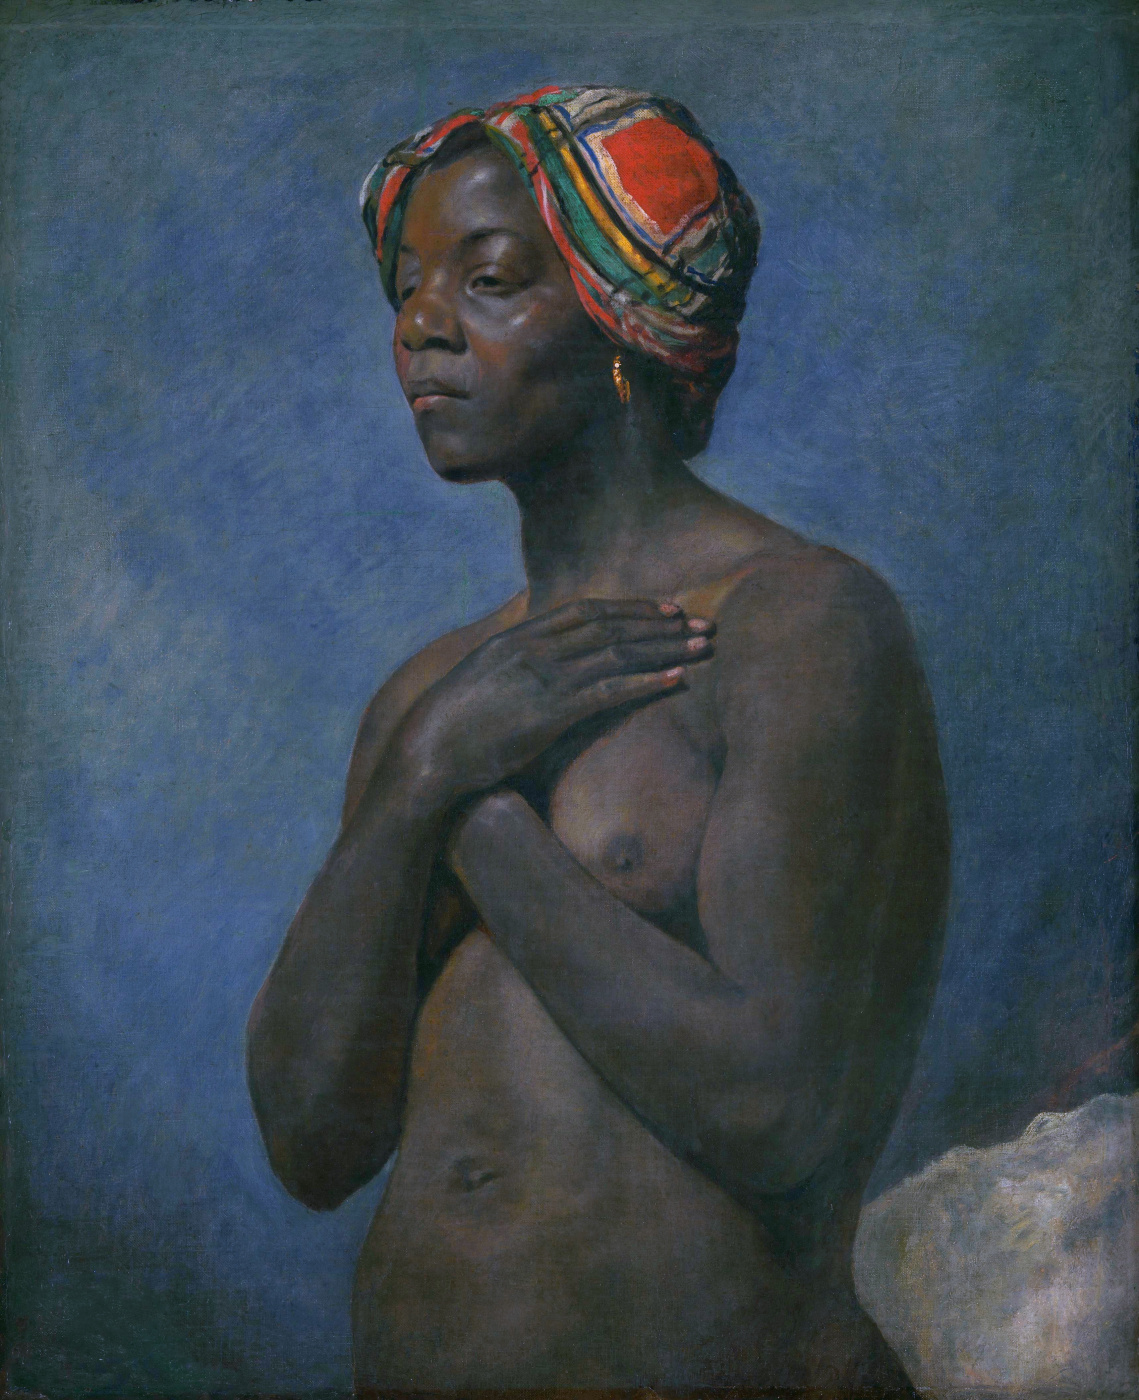 Unknown French. Black woman